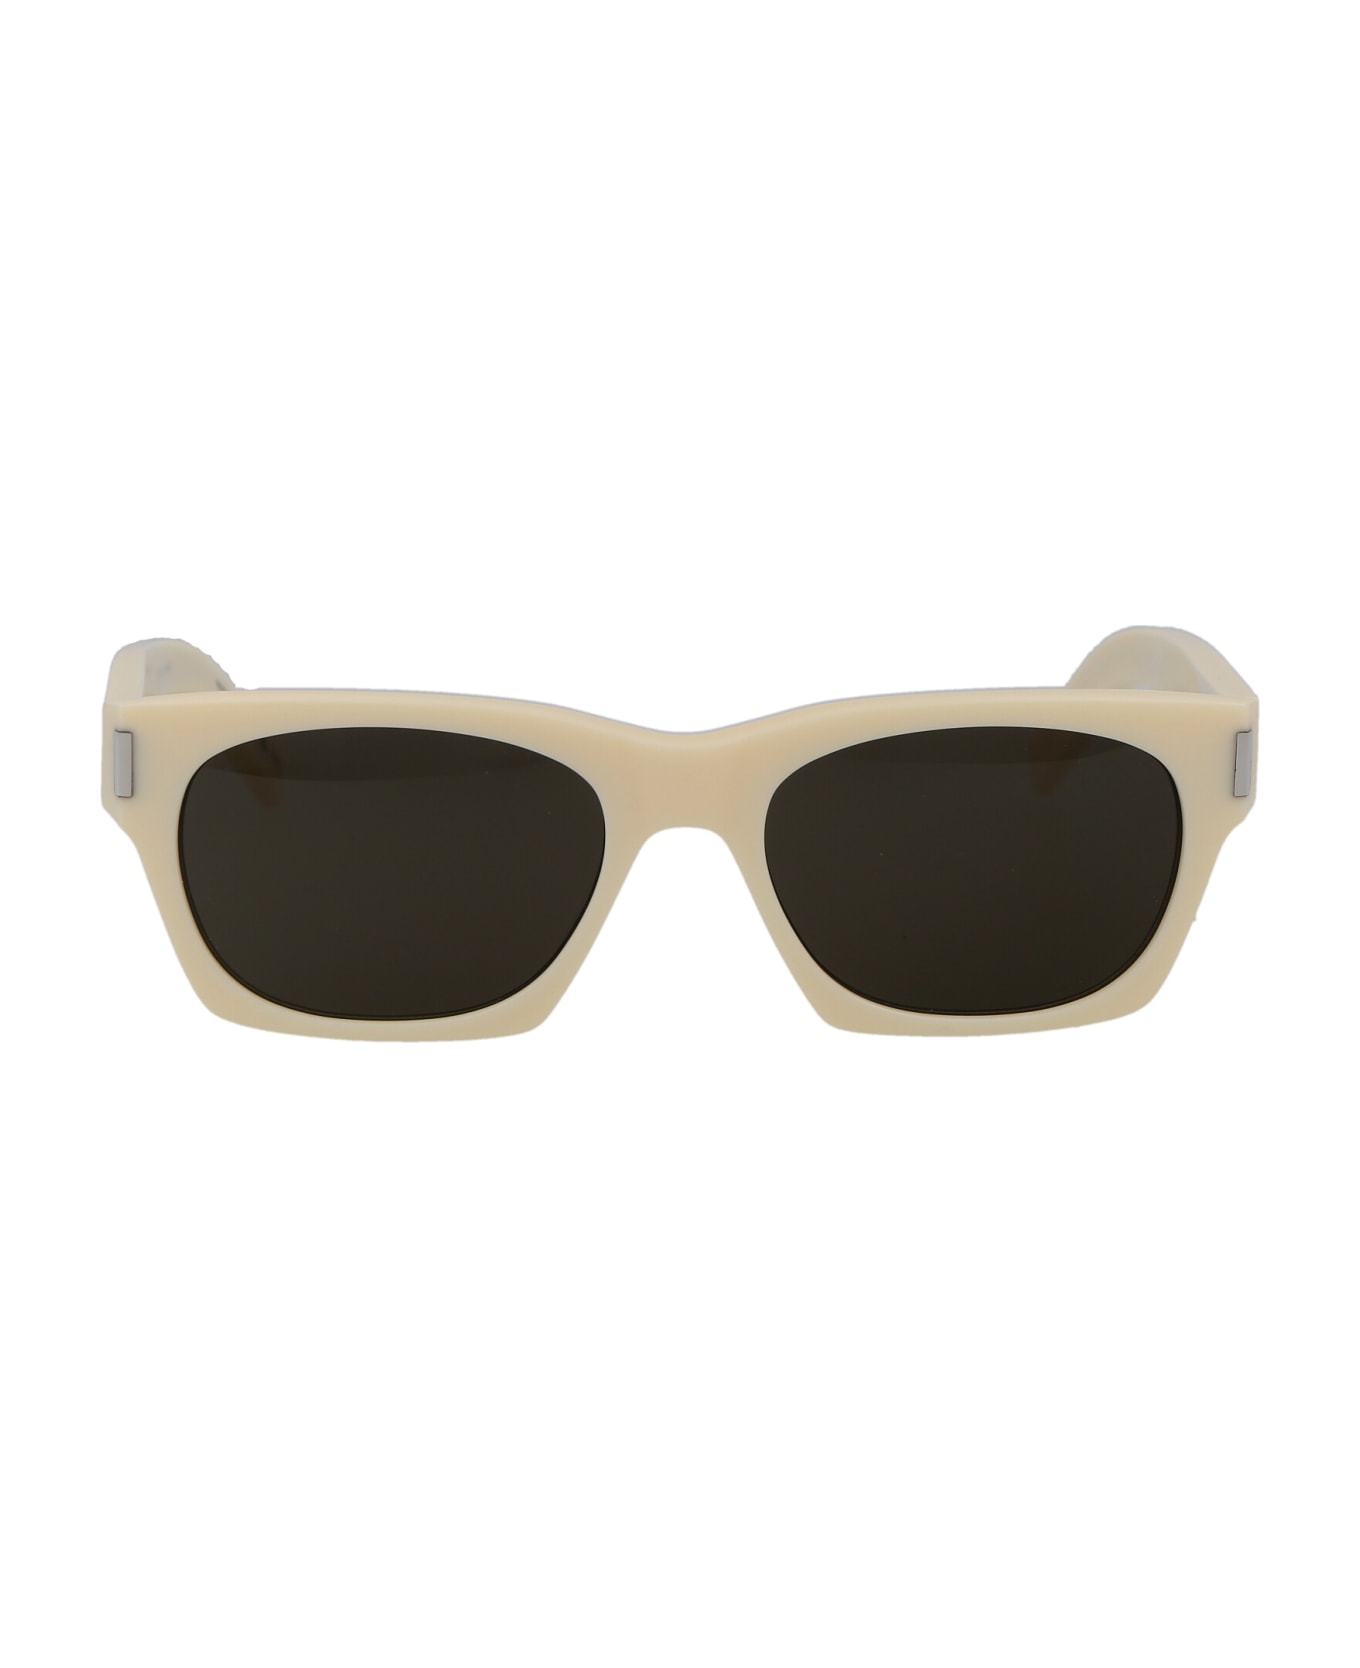 Saint Laurent Eyewear Sl 402 Sunglasses - 020 IVORY IVORY GREY